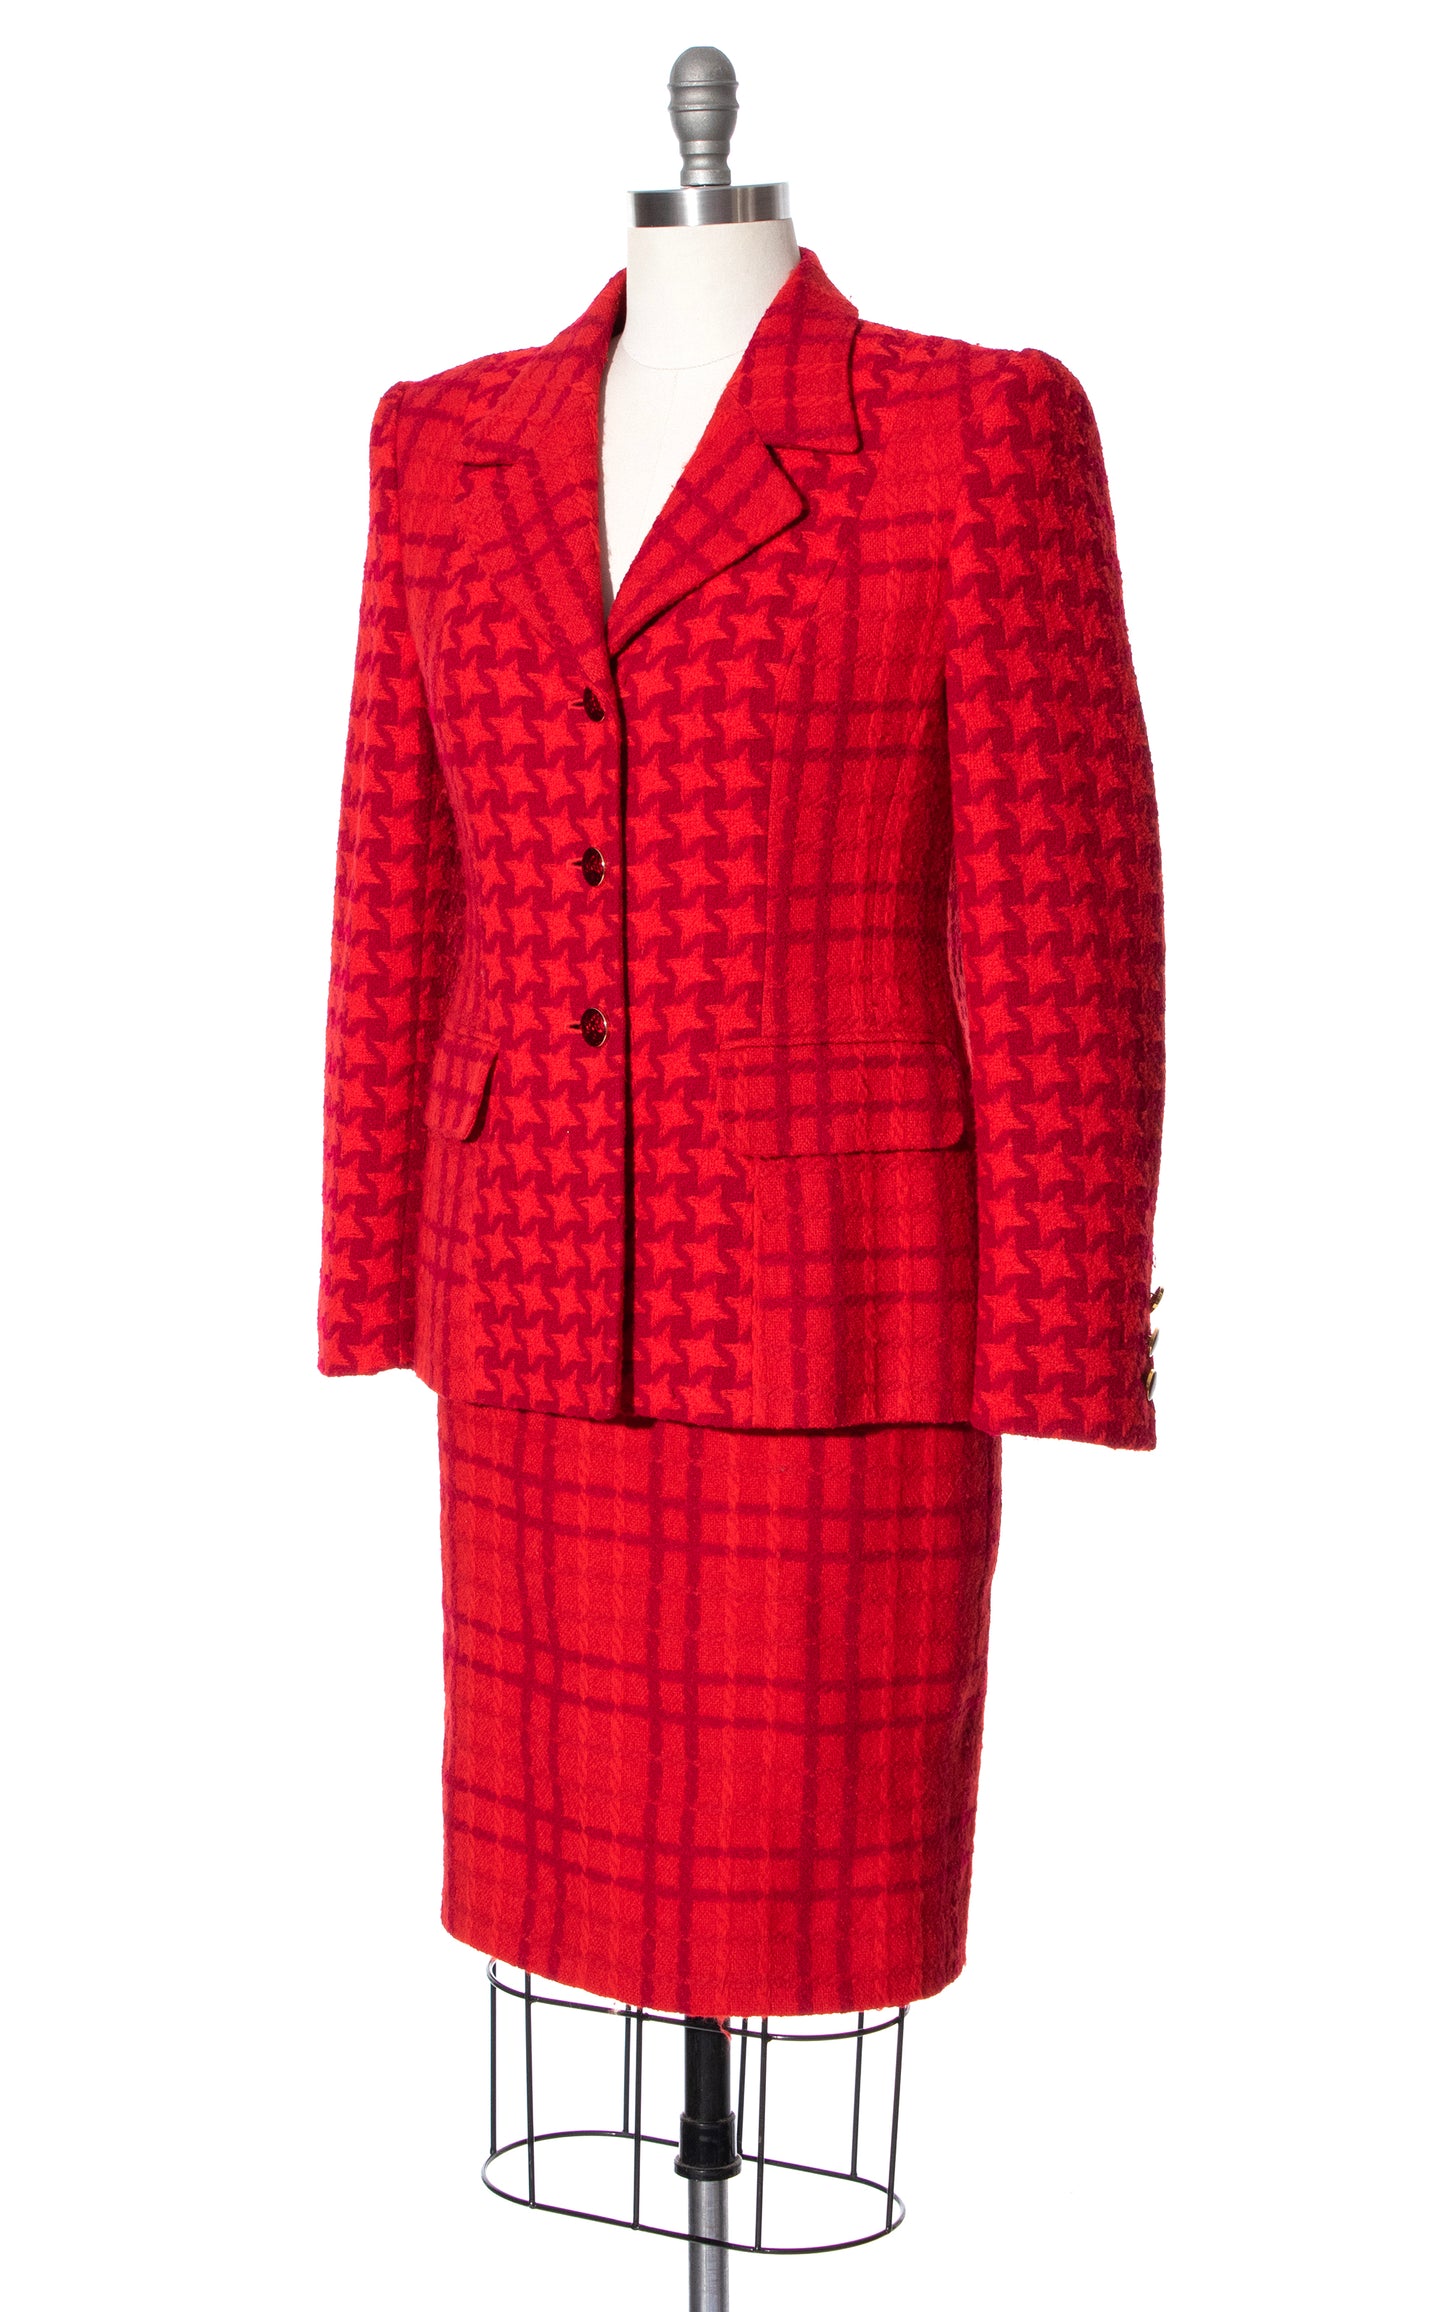 Vintage 80s 1980s ESCADA Houndstooth Plaid Red Wool Skirt Suit BirthdayLifeVintage